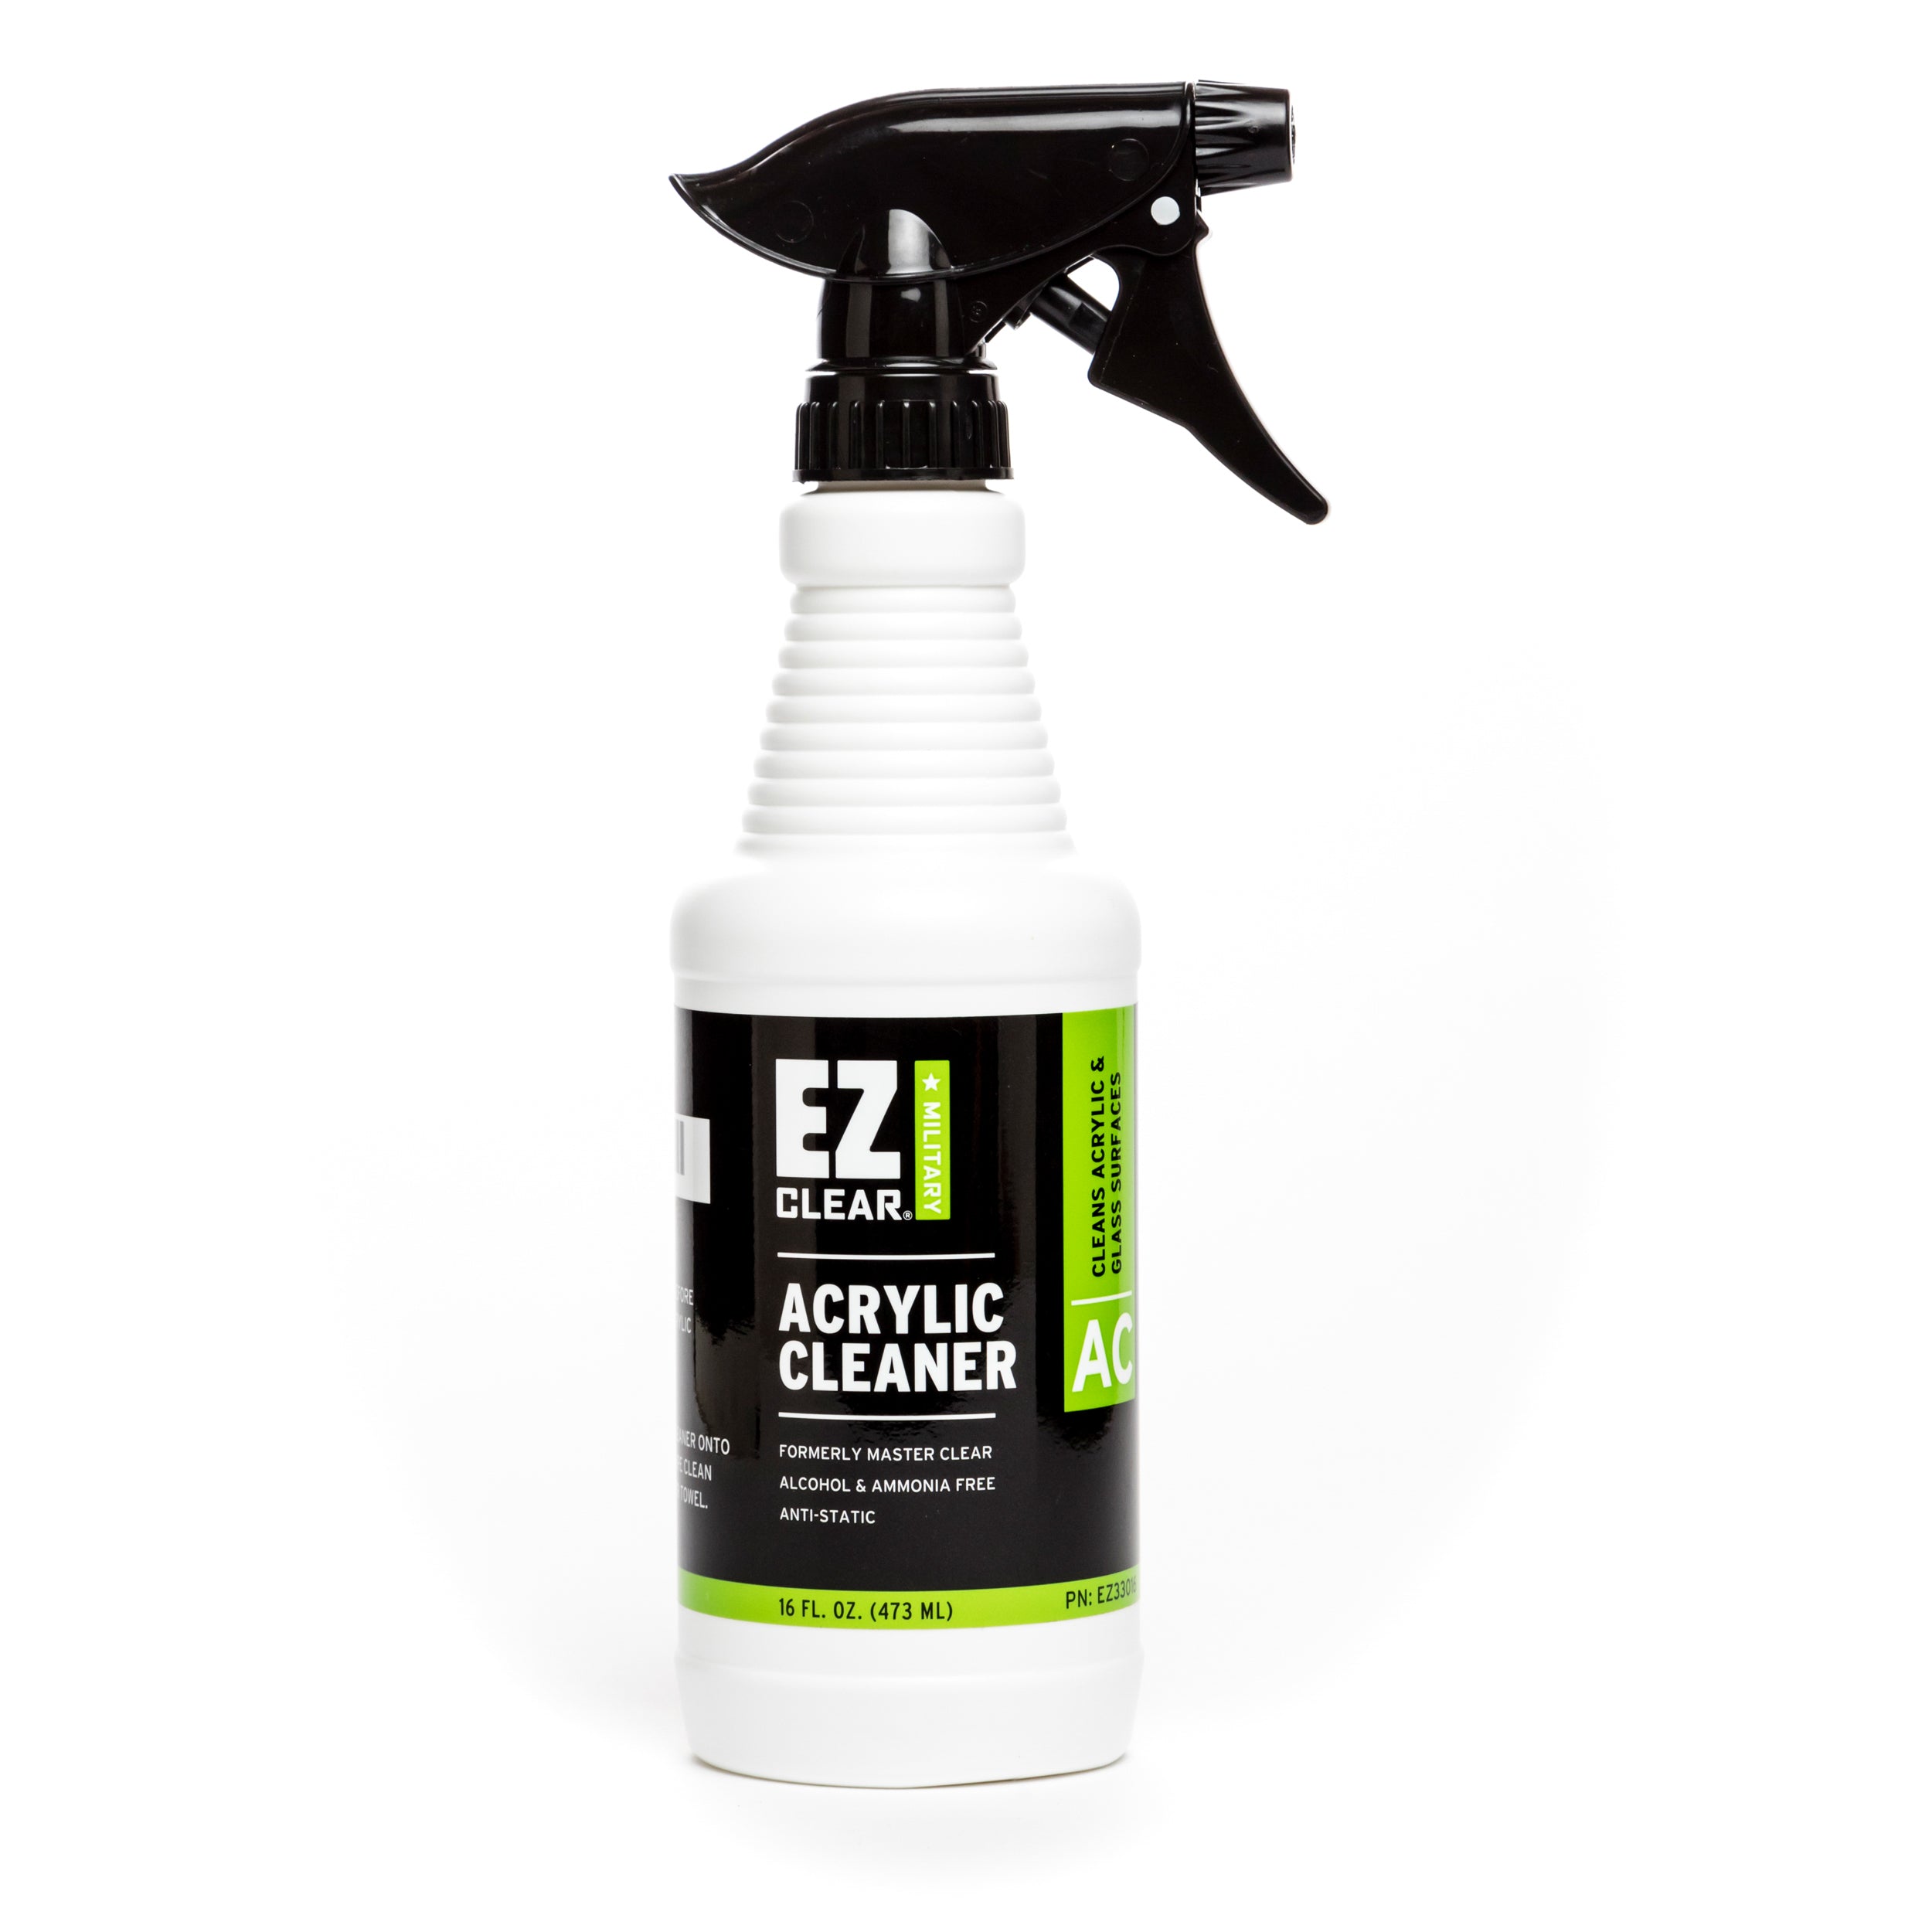 EZCLEAR Military Acrylic Cleaner (16 FL OZ)